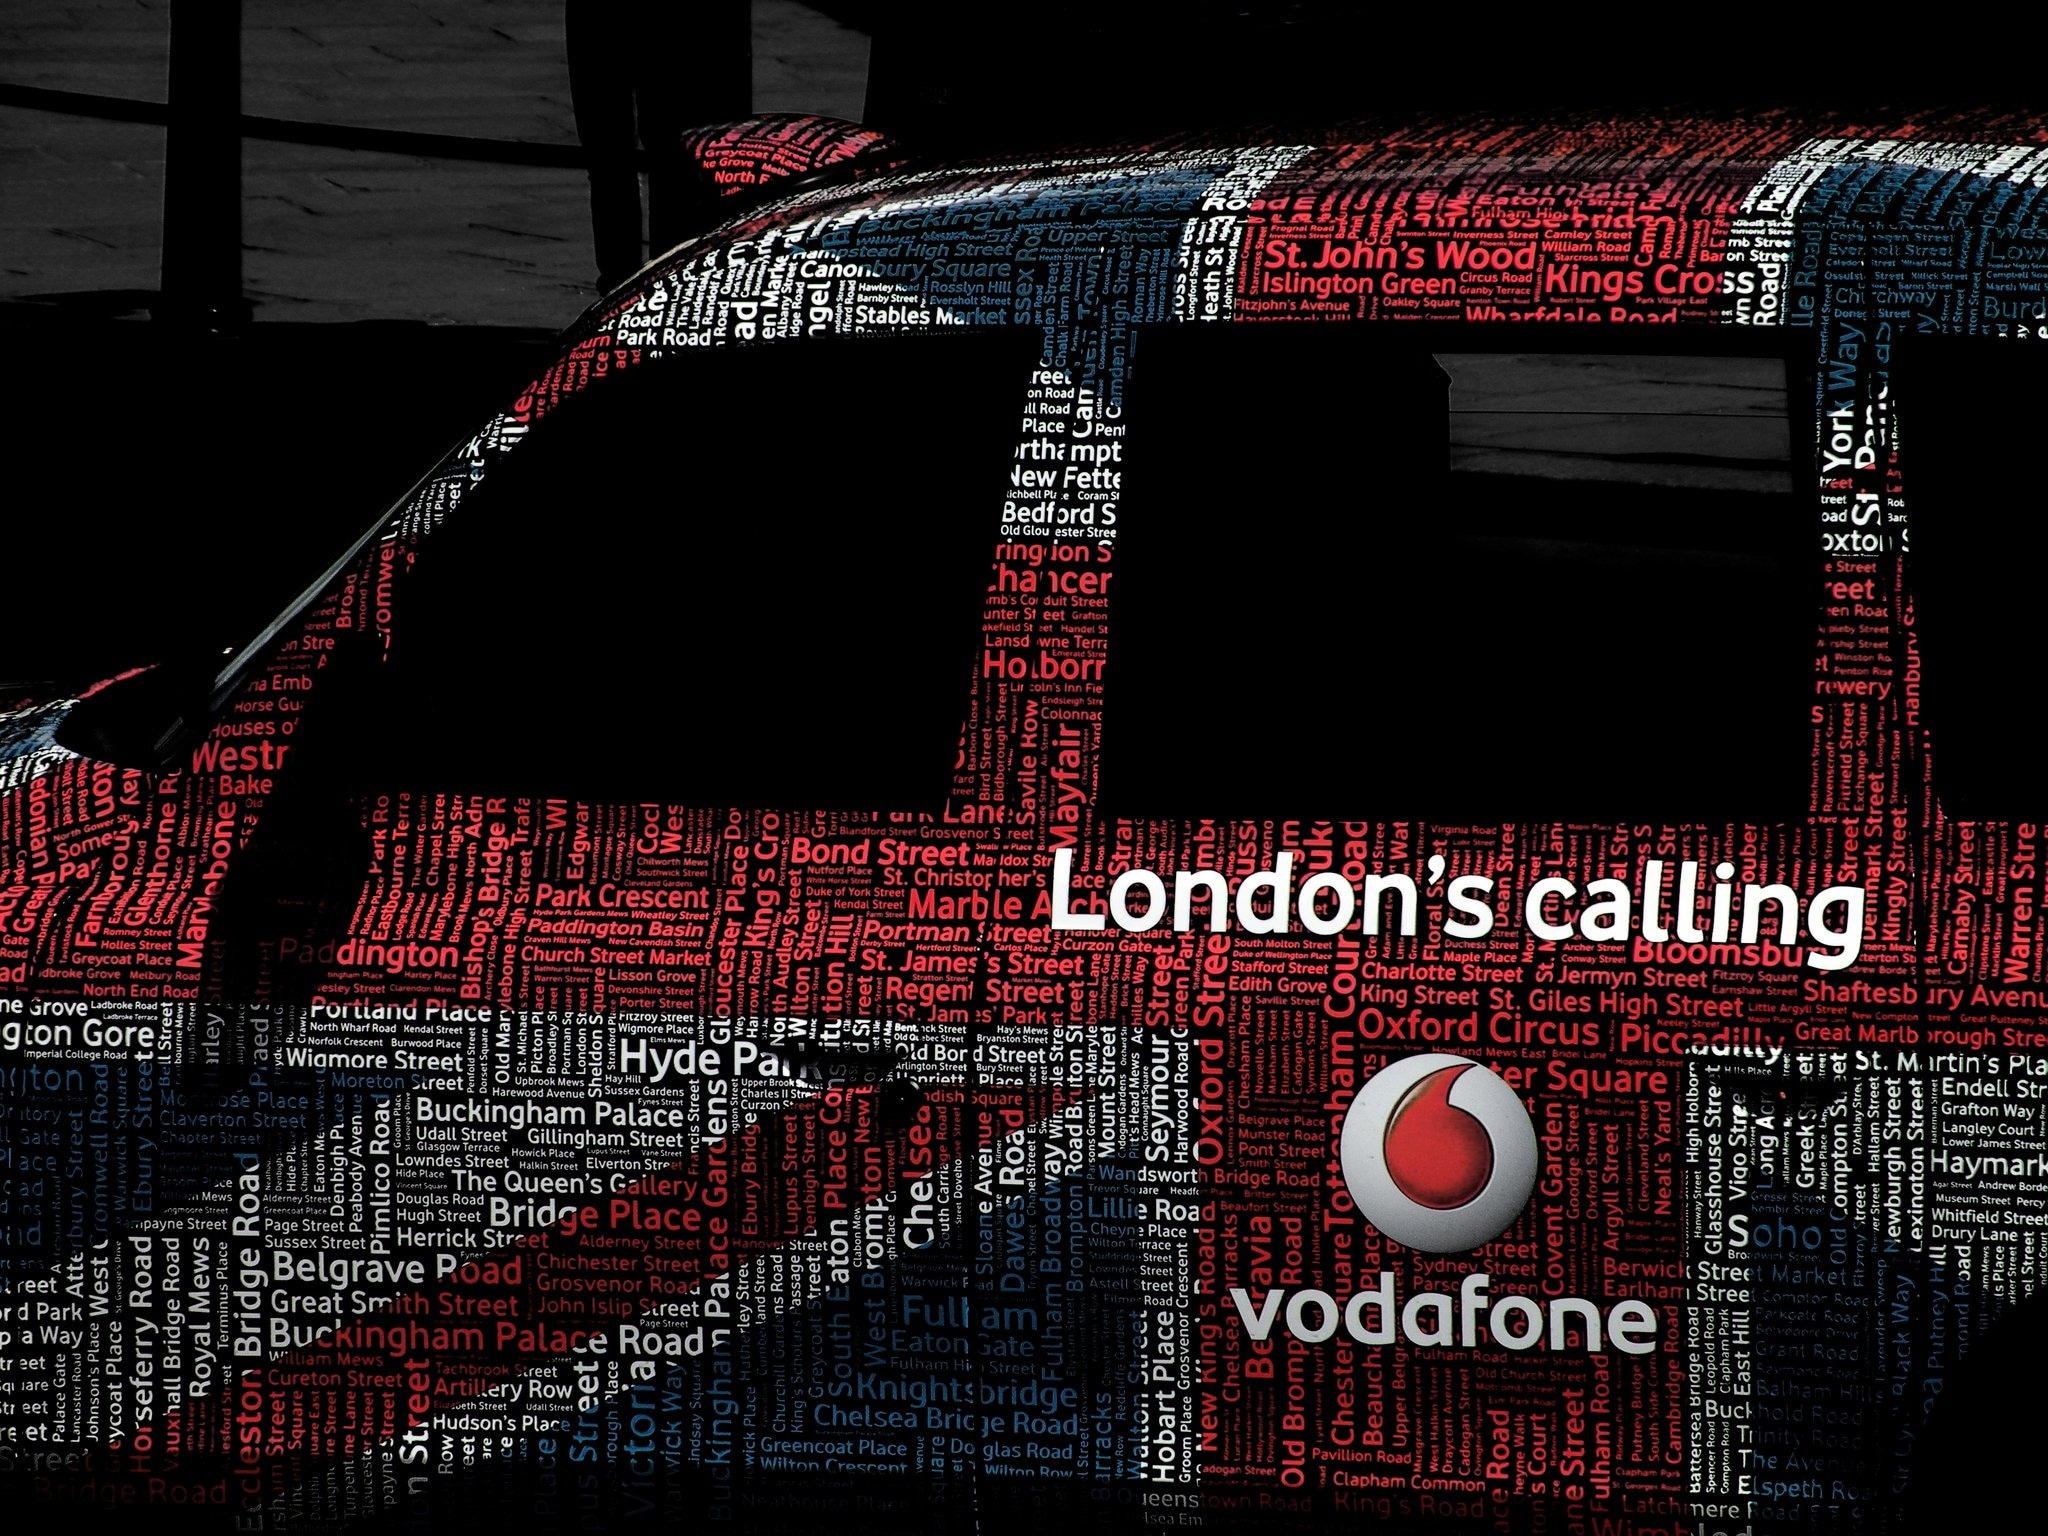 london's calling vodafone